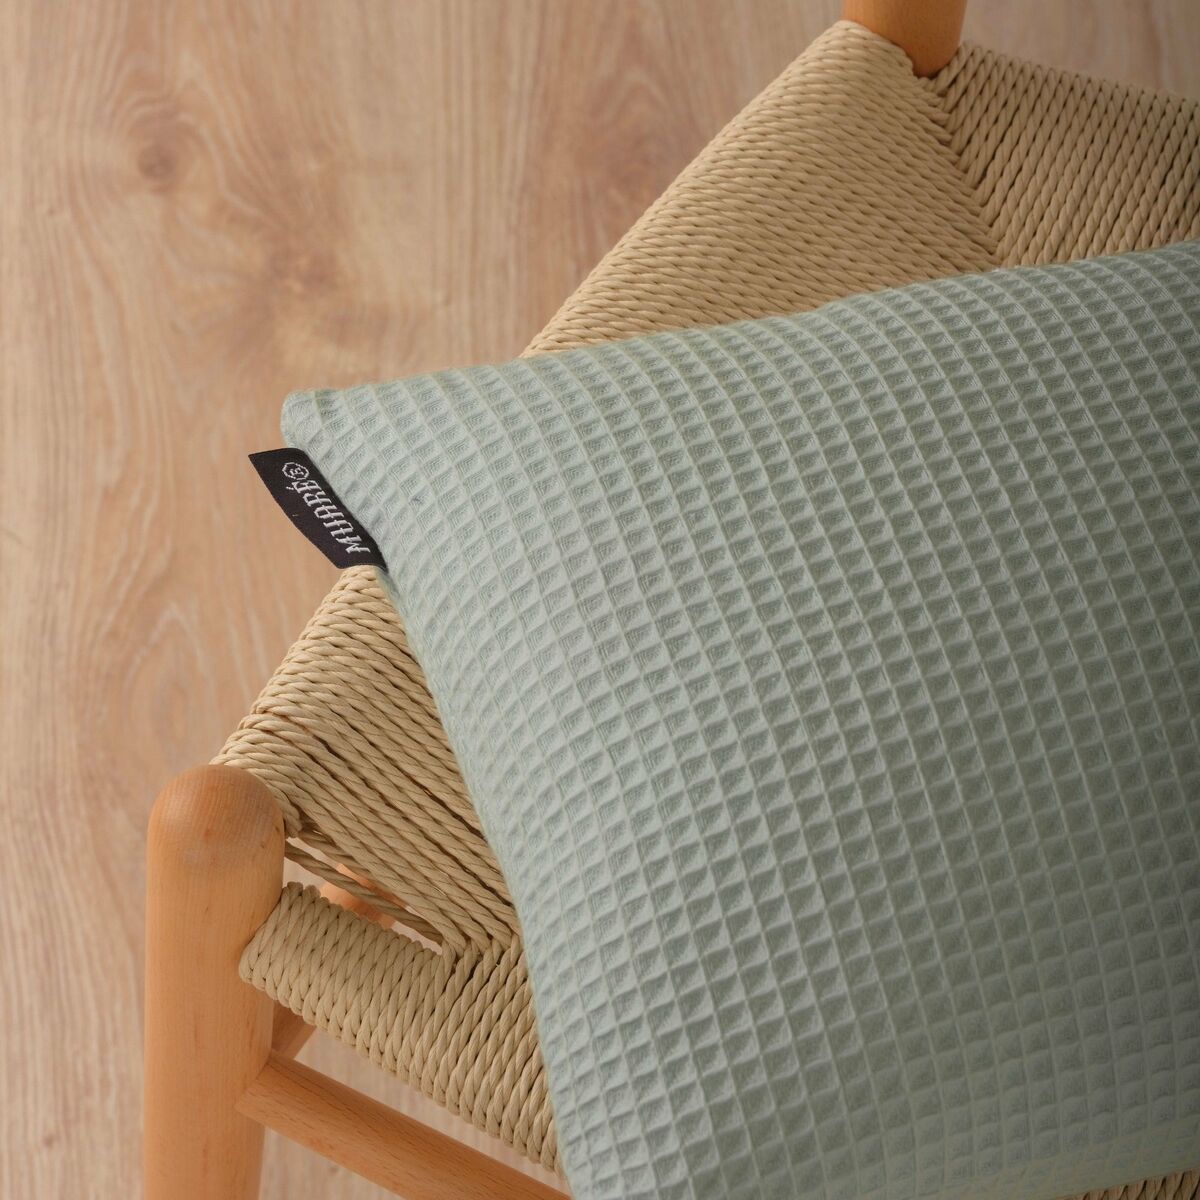 Cushion cover Belum Waffle Green 30 x 50 cm